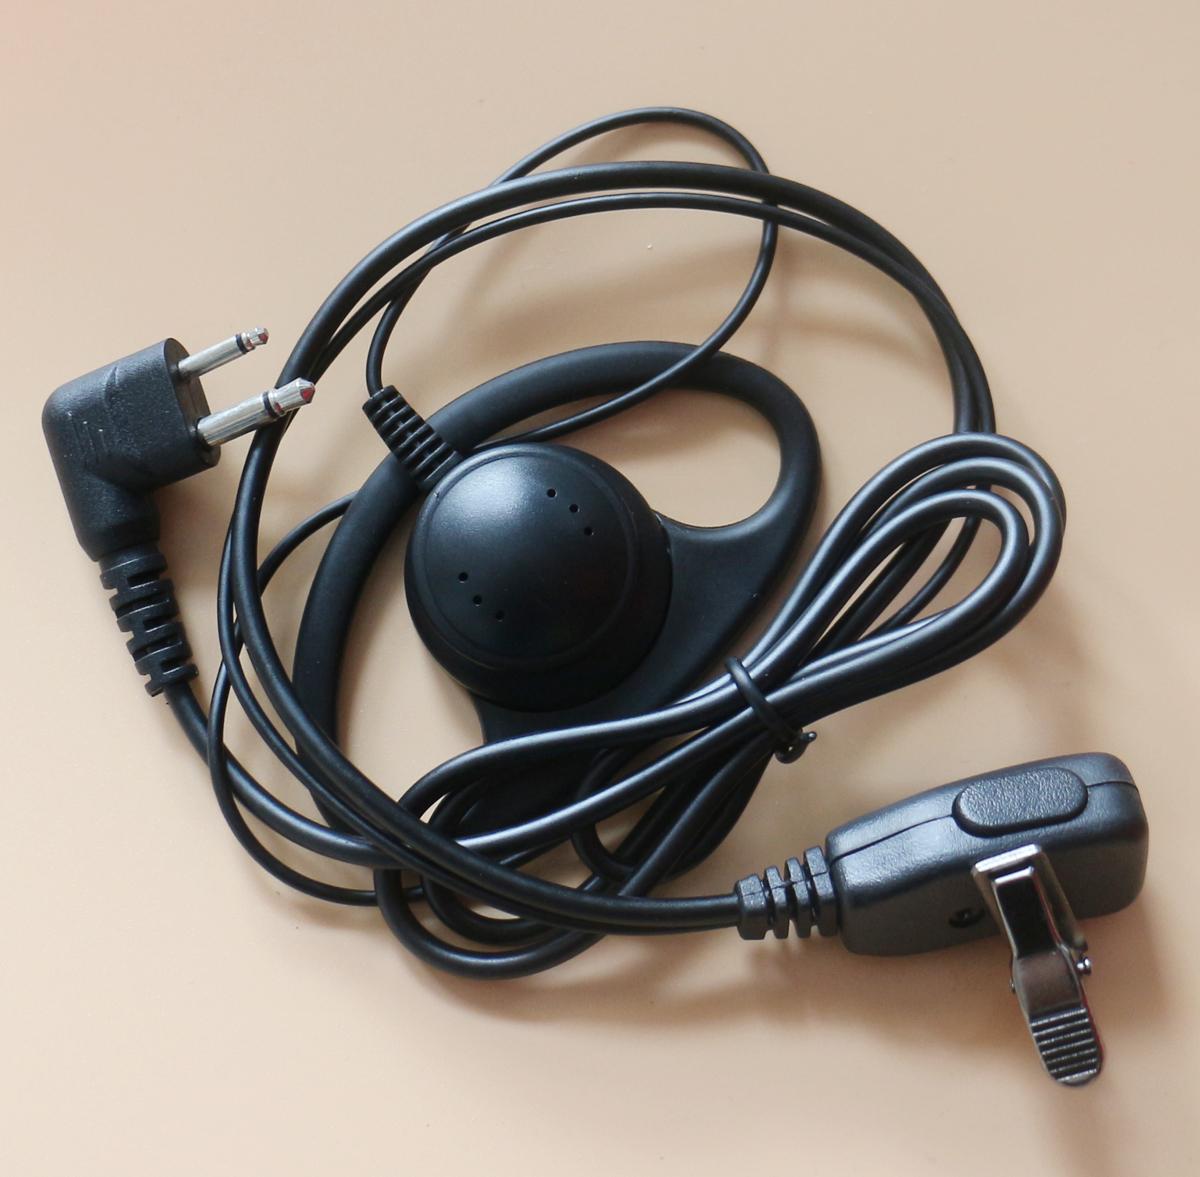 10xD-Ring Shape 2Pin Ear Hook Earpiece Headset Earphone Mic For Motorola Walkie Talkie Radio CLS1110 CLS1410 CLS1413 CLS1450